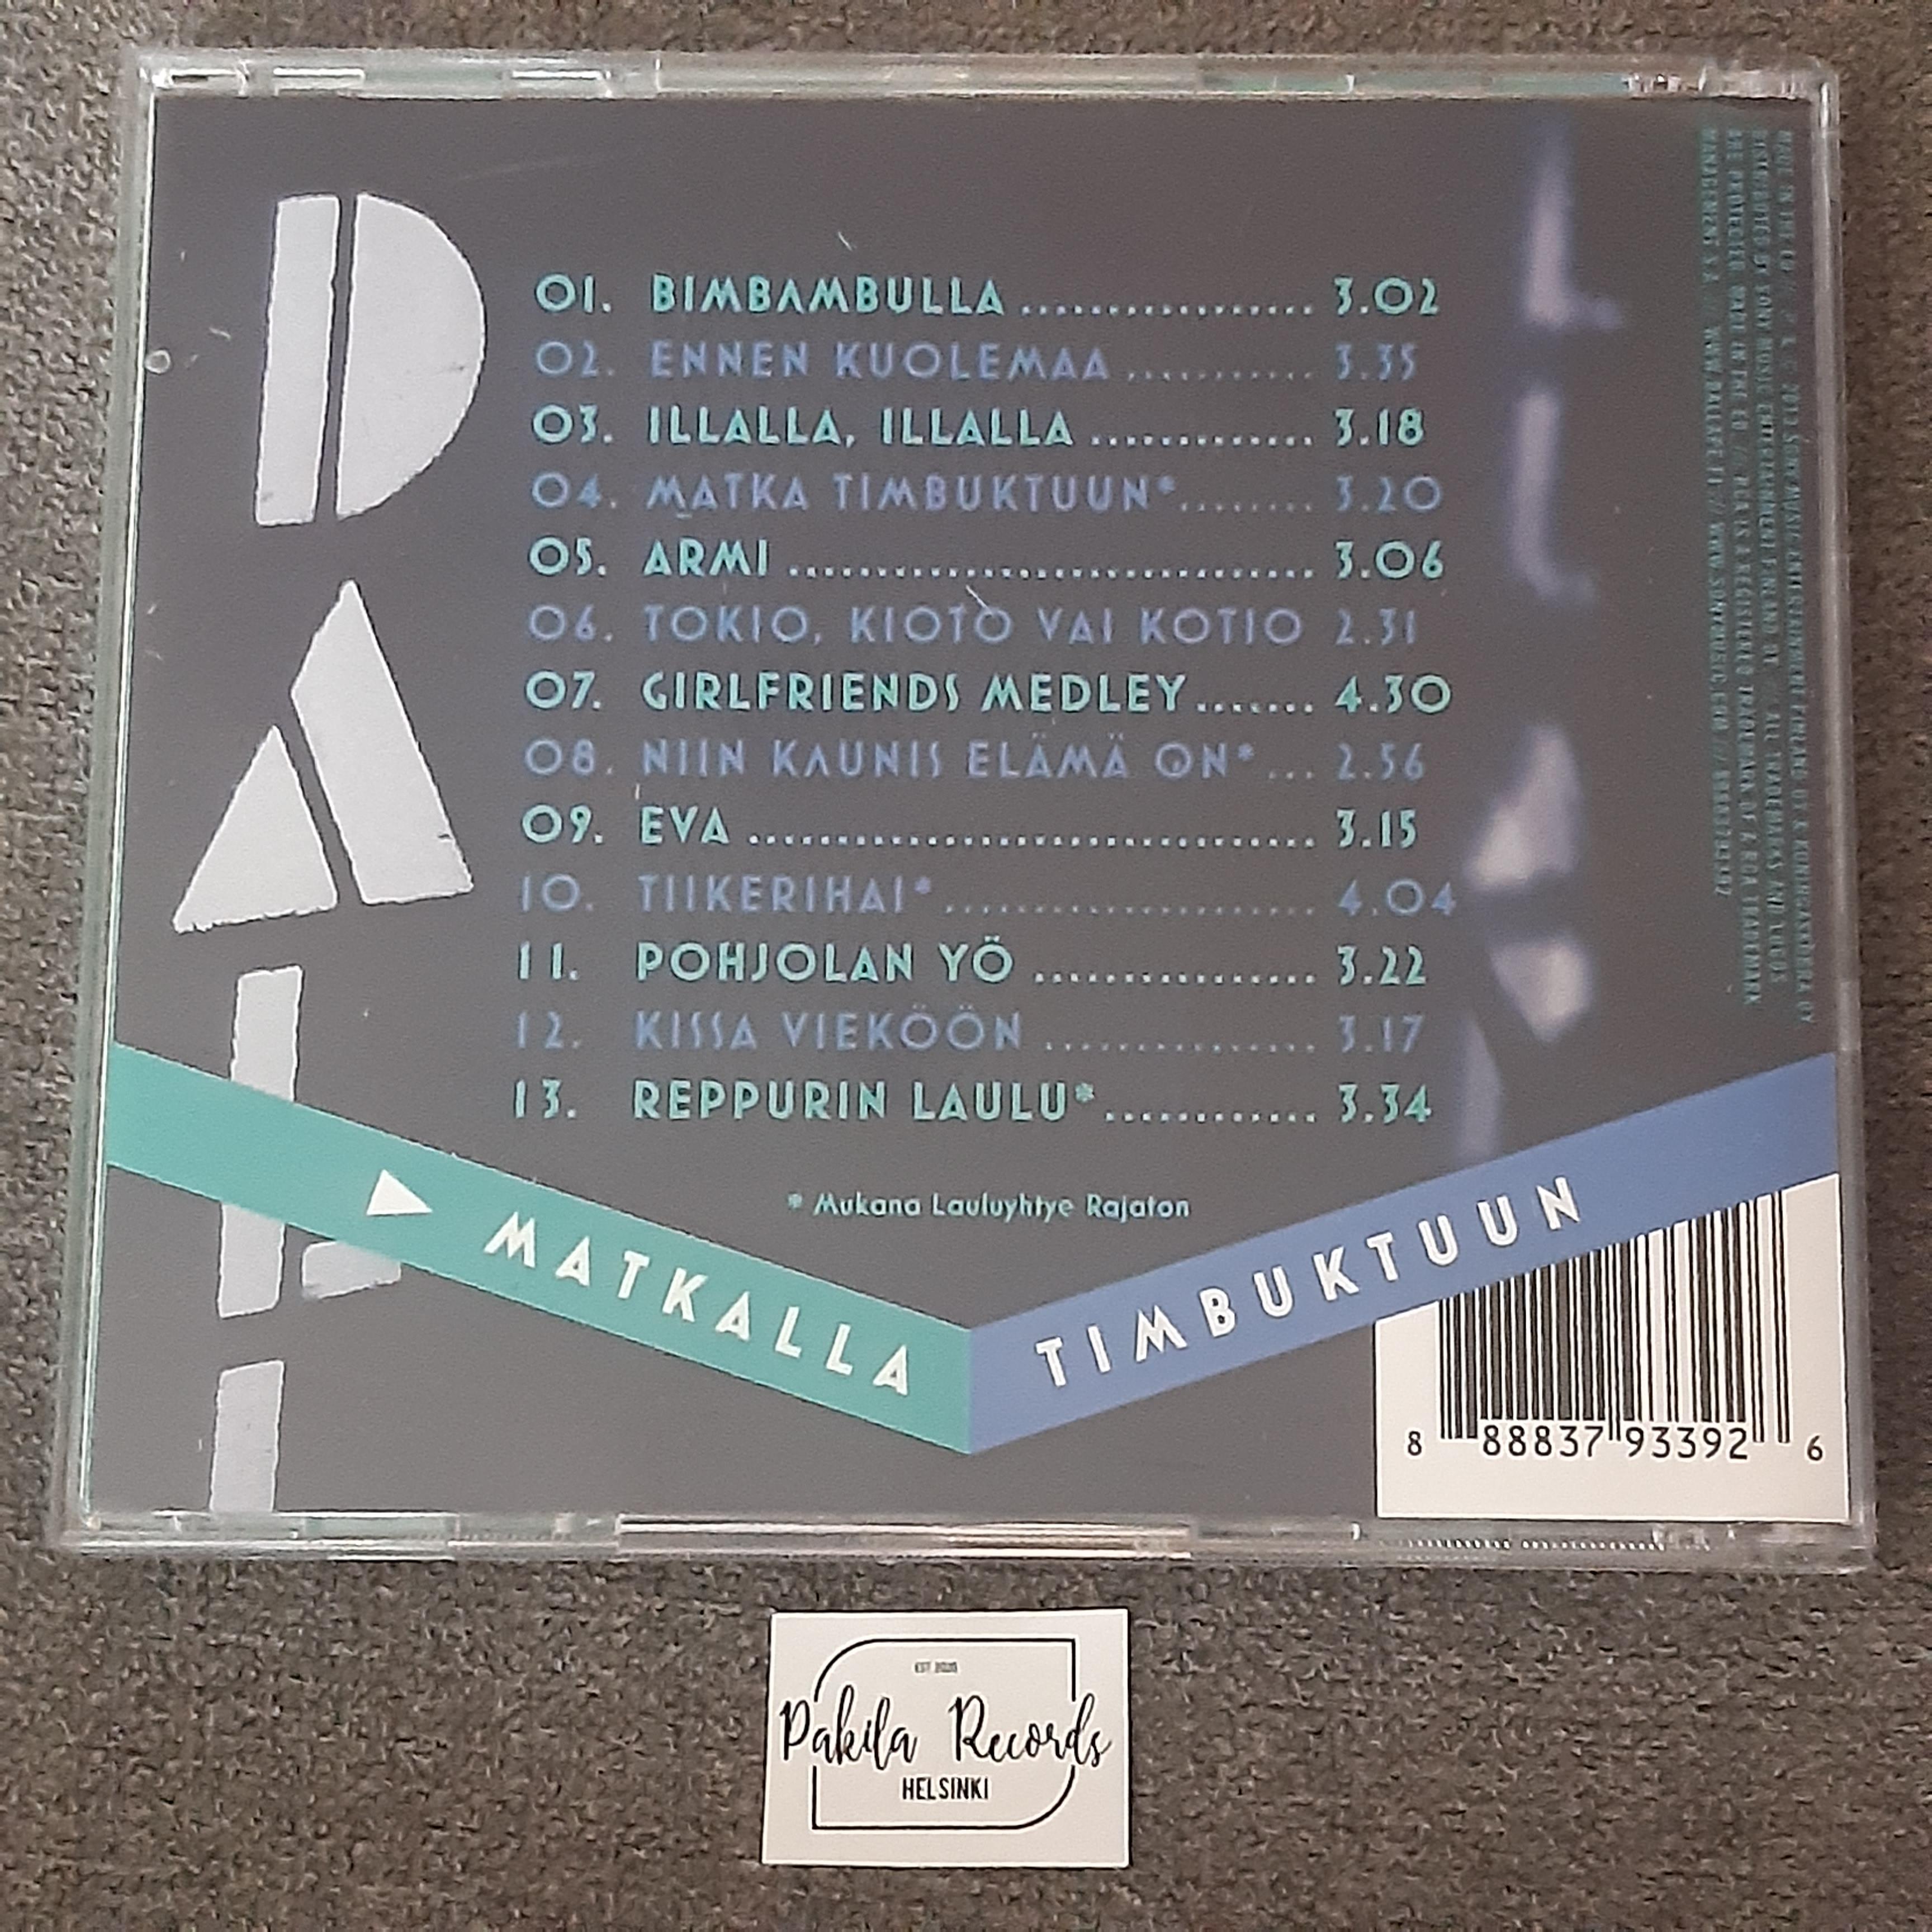 Dallapé - Matkalla Timbuktuun - CD (käytetty)